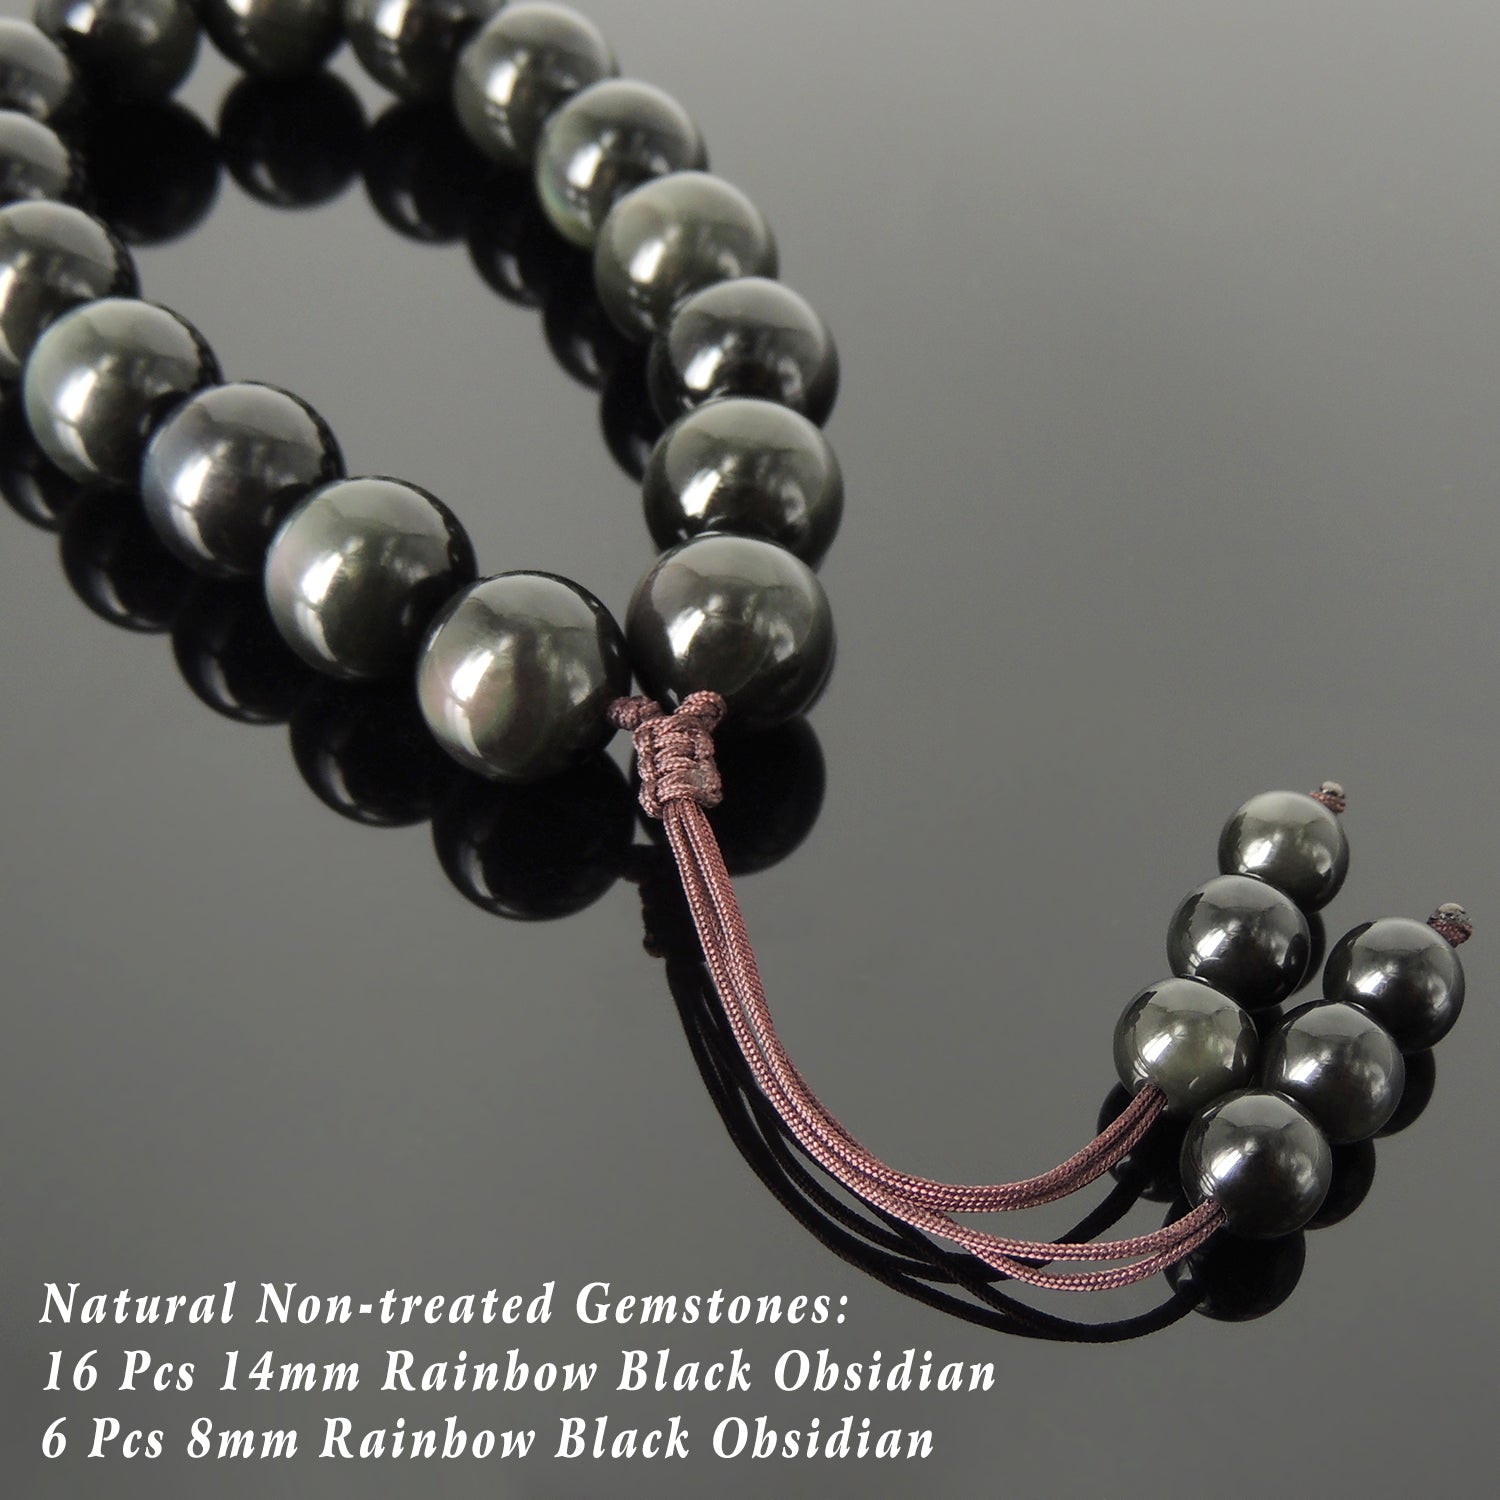 Handmade Adjustable Braided Cords, Healing 14mm Rainbow Black Obsidian Meditation Beads, Natural Gemstones - Men's Women's Protection & Compassion HL005